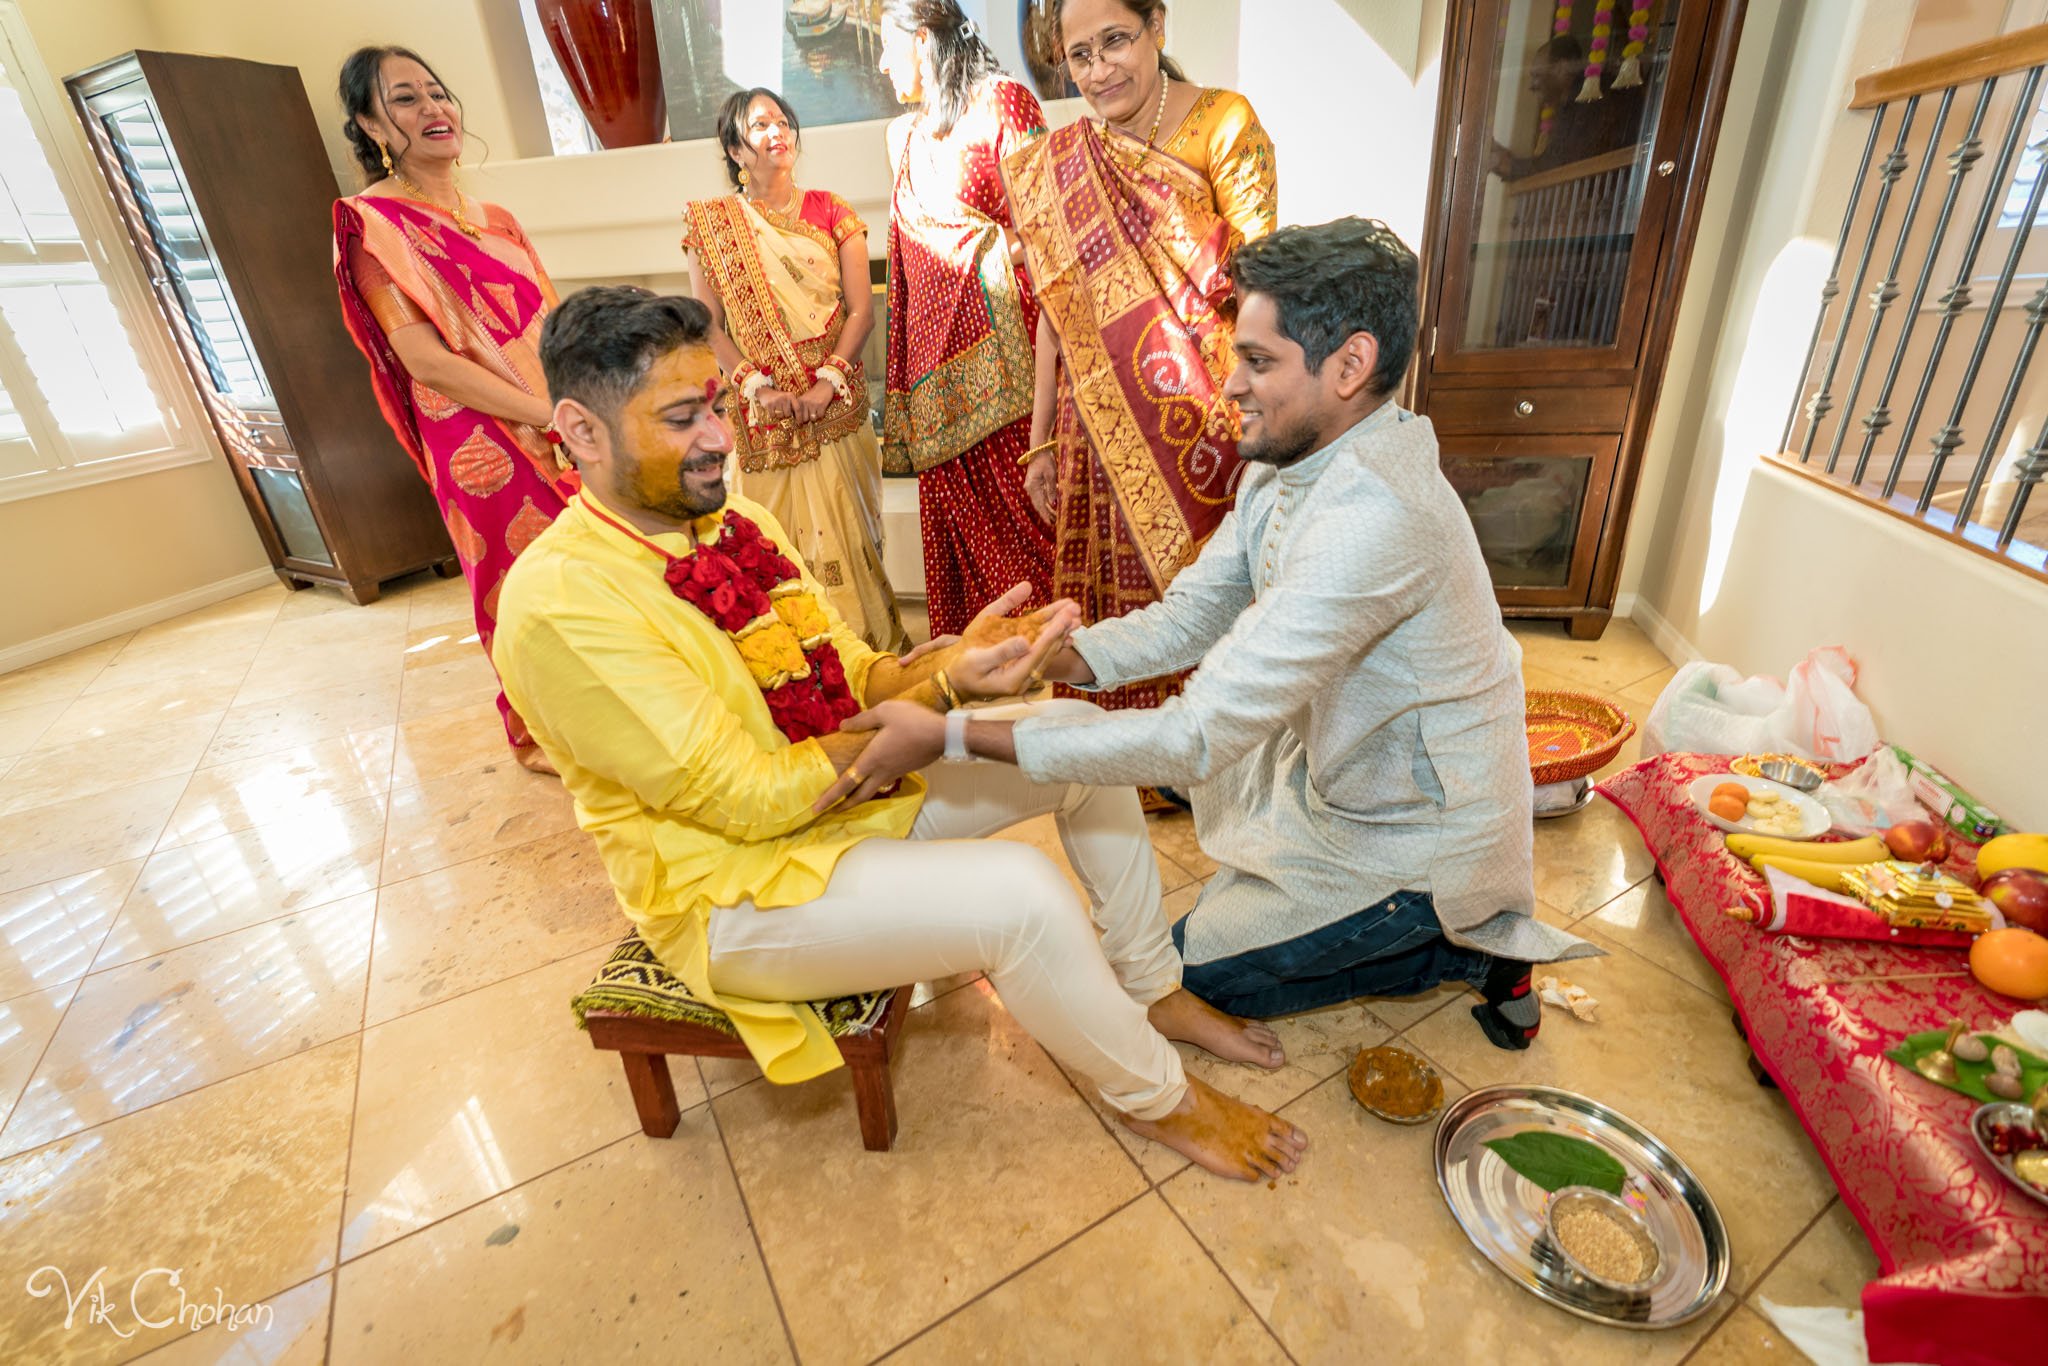 2022-02-03-Hely-&-Parth-Ganesh-Pooja-Indian-Wedding-Vik-Chohan-Photography-Photo-Booth-Social-Media-VCP-222.jpg